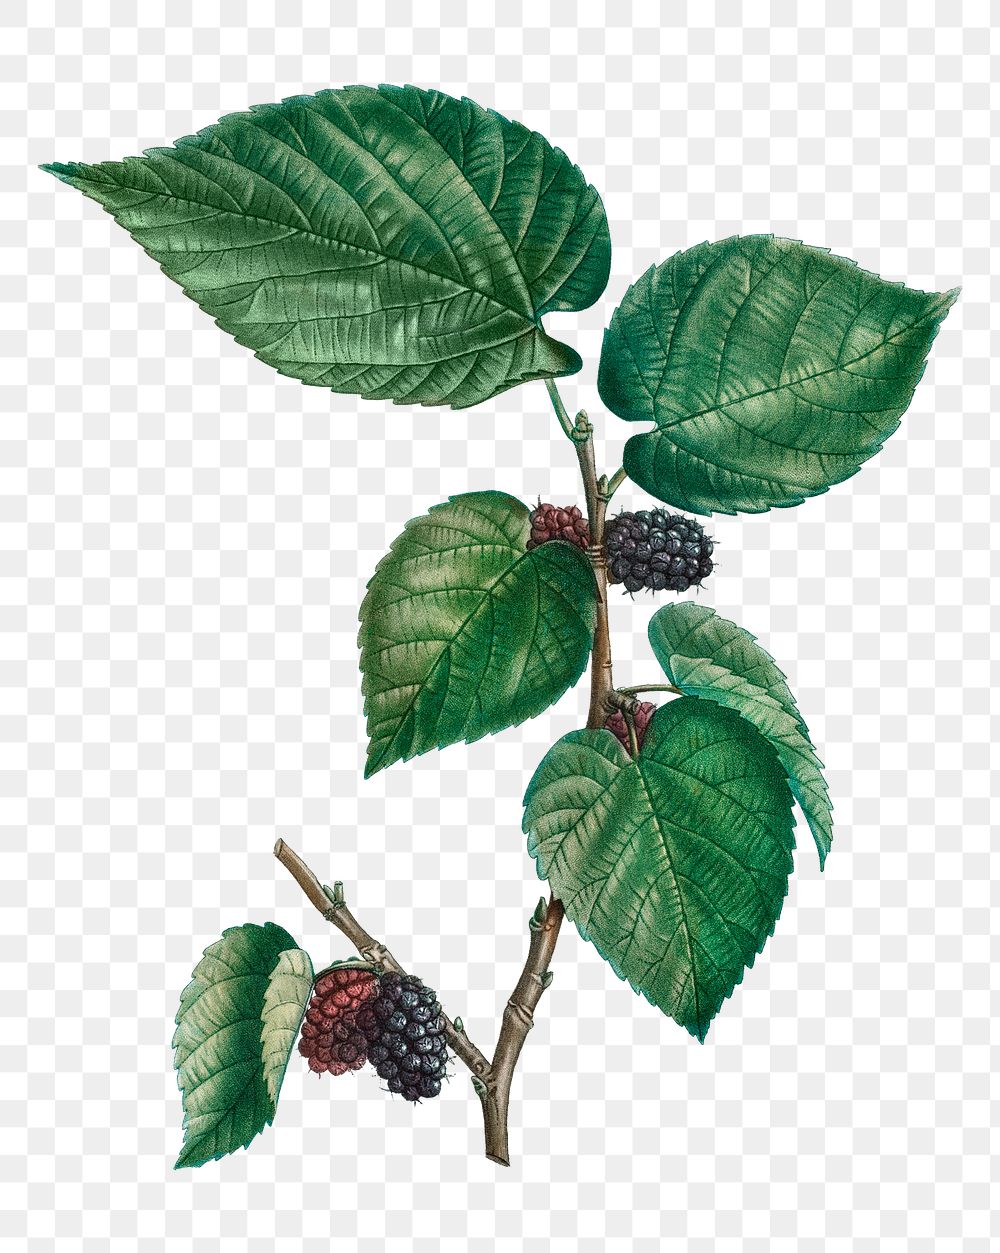 Black mulberry plant transparent png